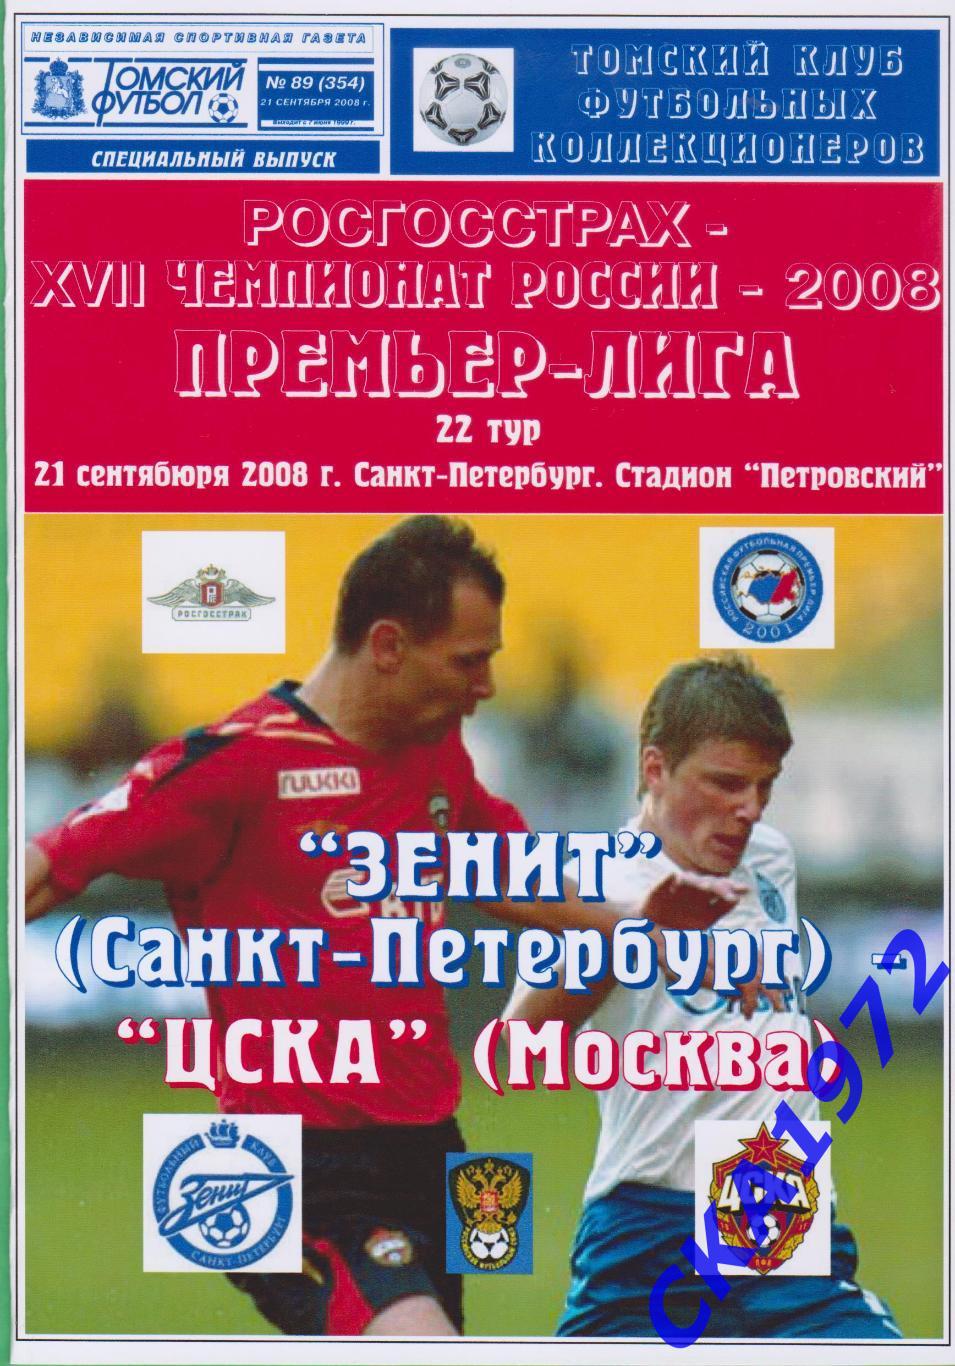 программа Зенит Санкт-Петербург - ЦСКА Москва 2008